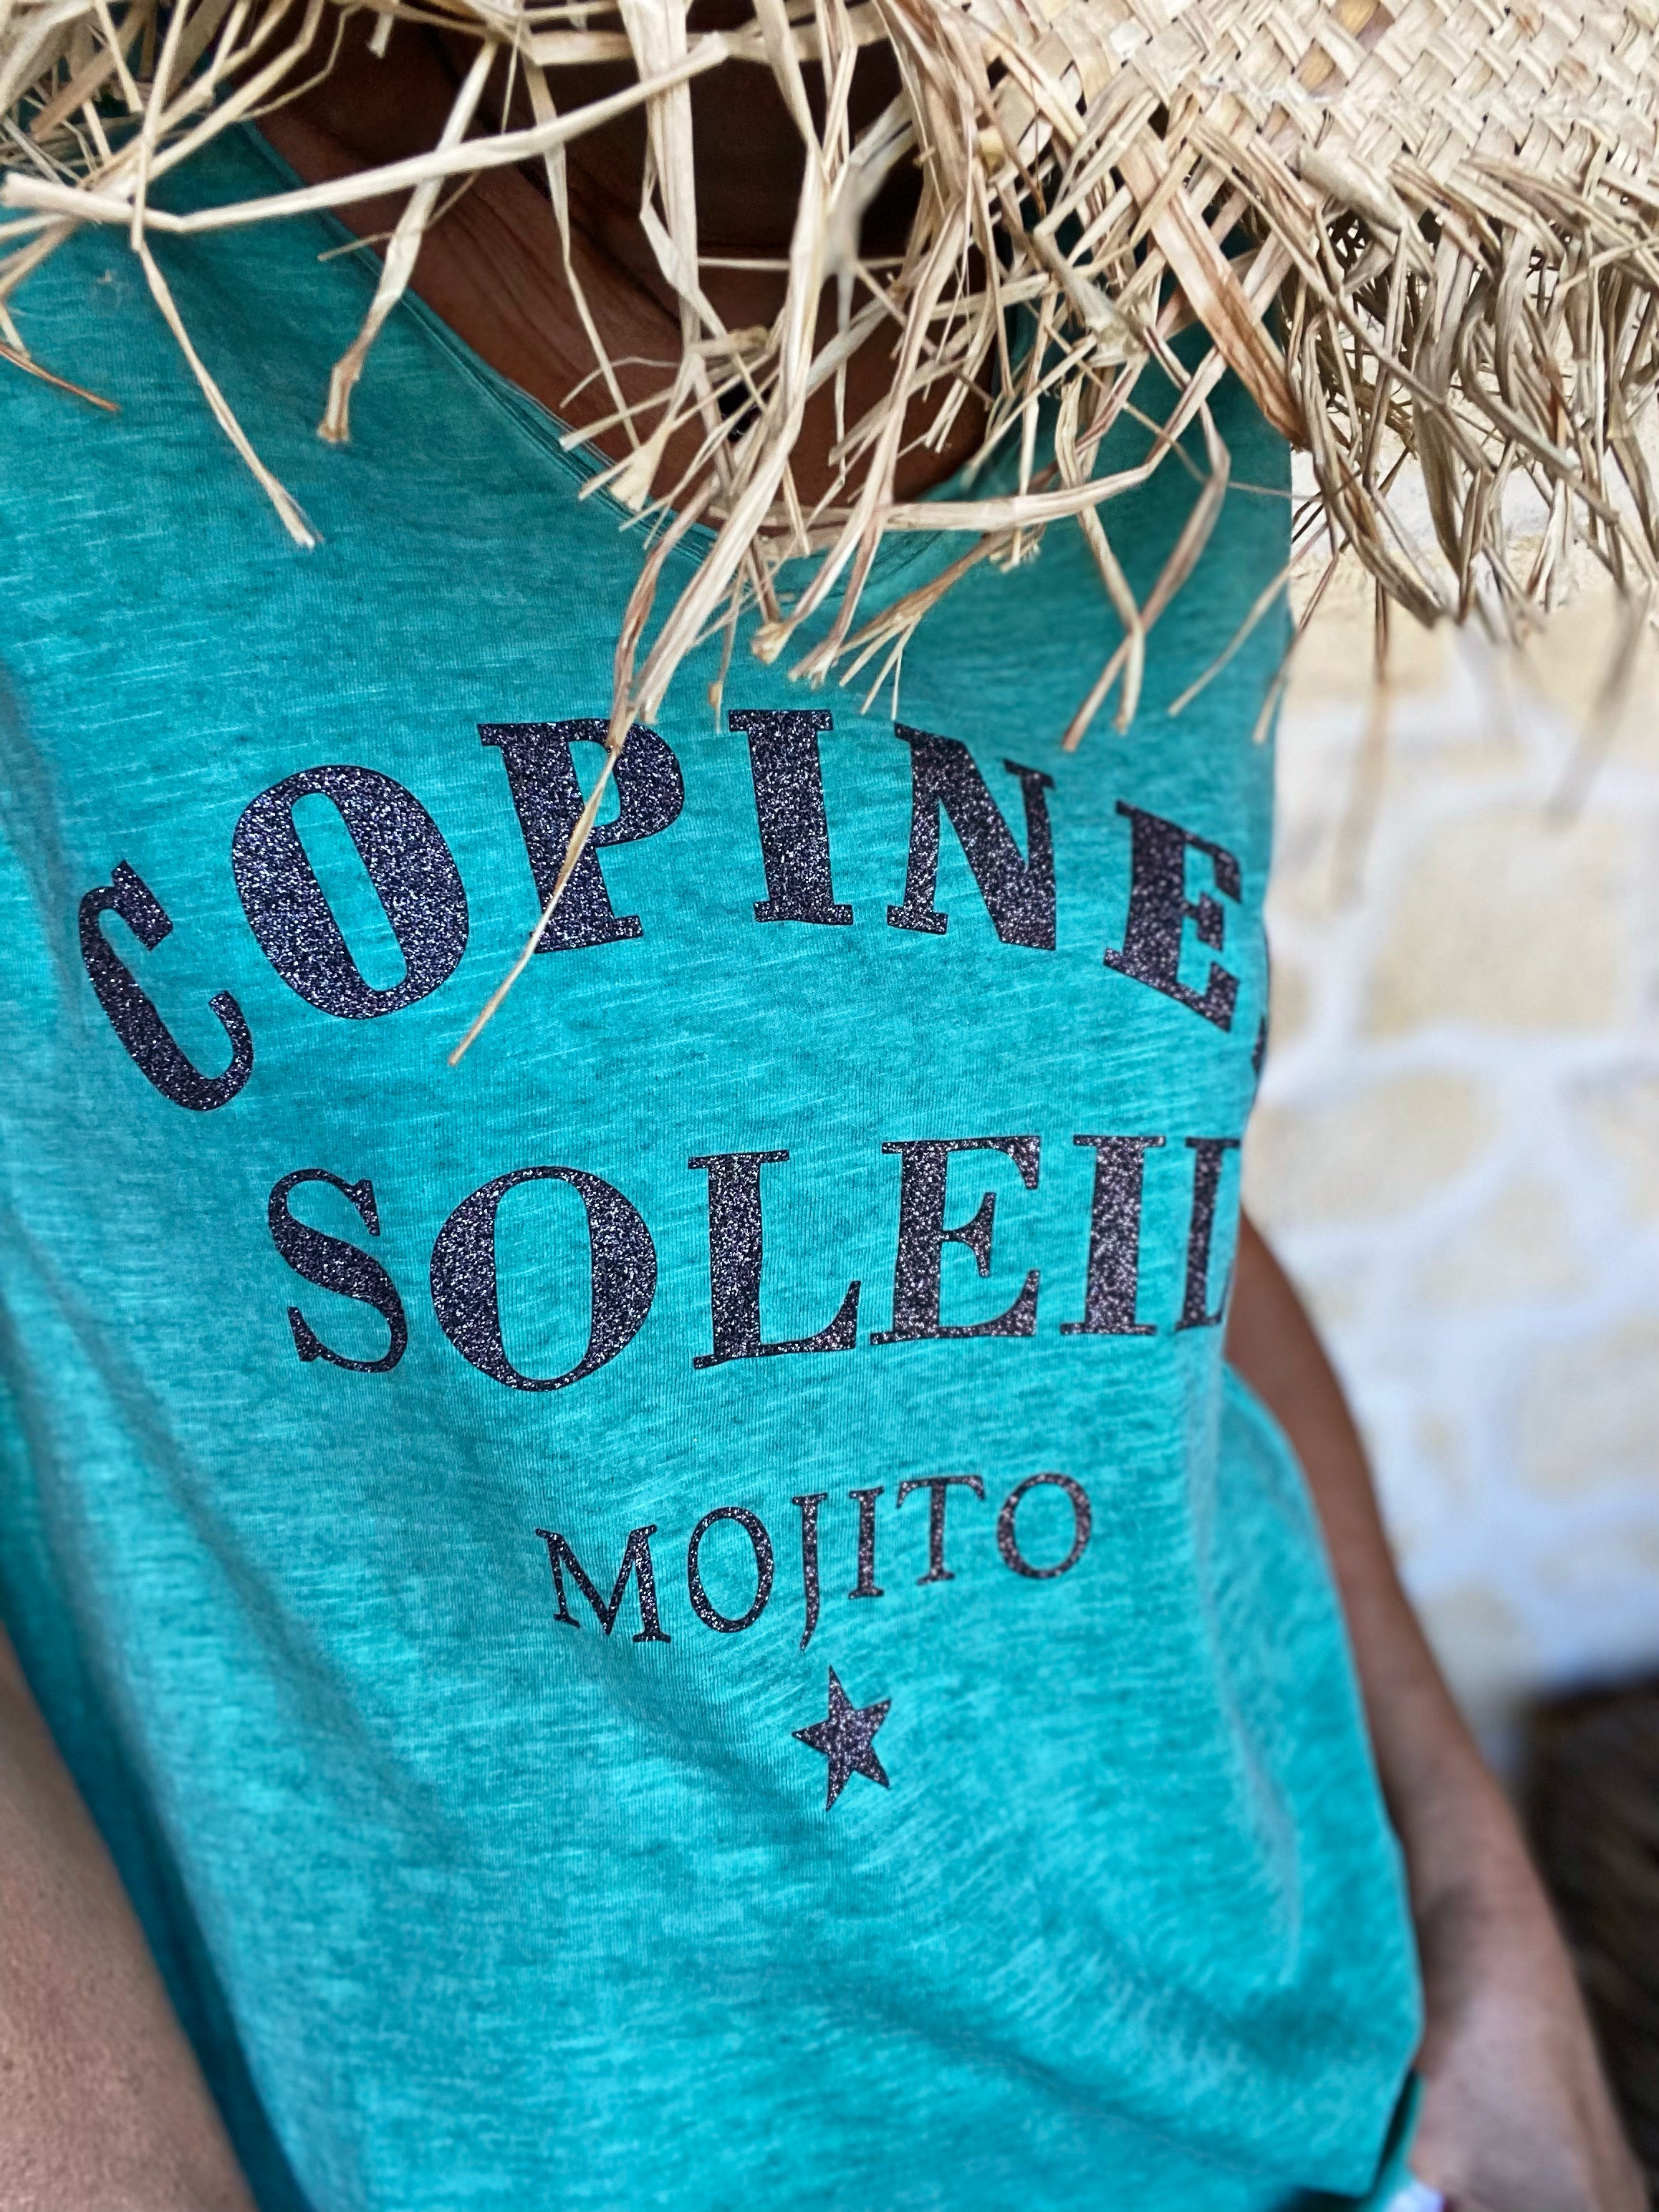 Tee shirt " Copines Soleil Mojito " Vert